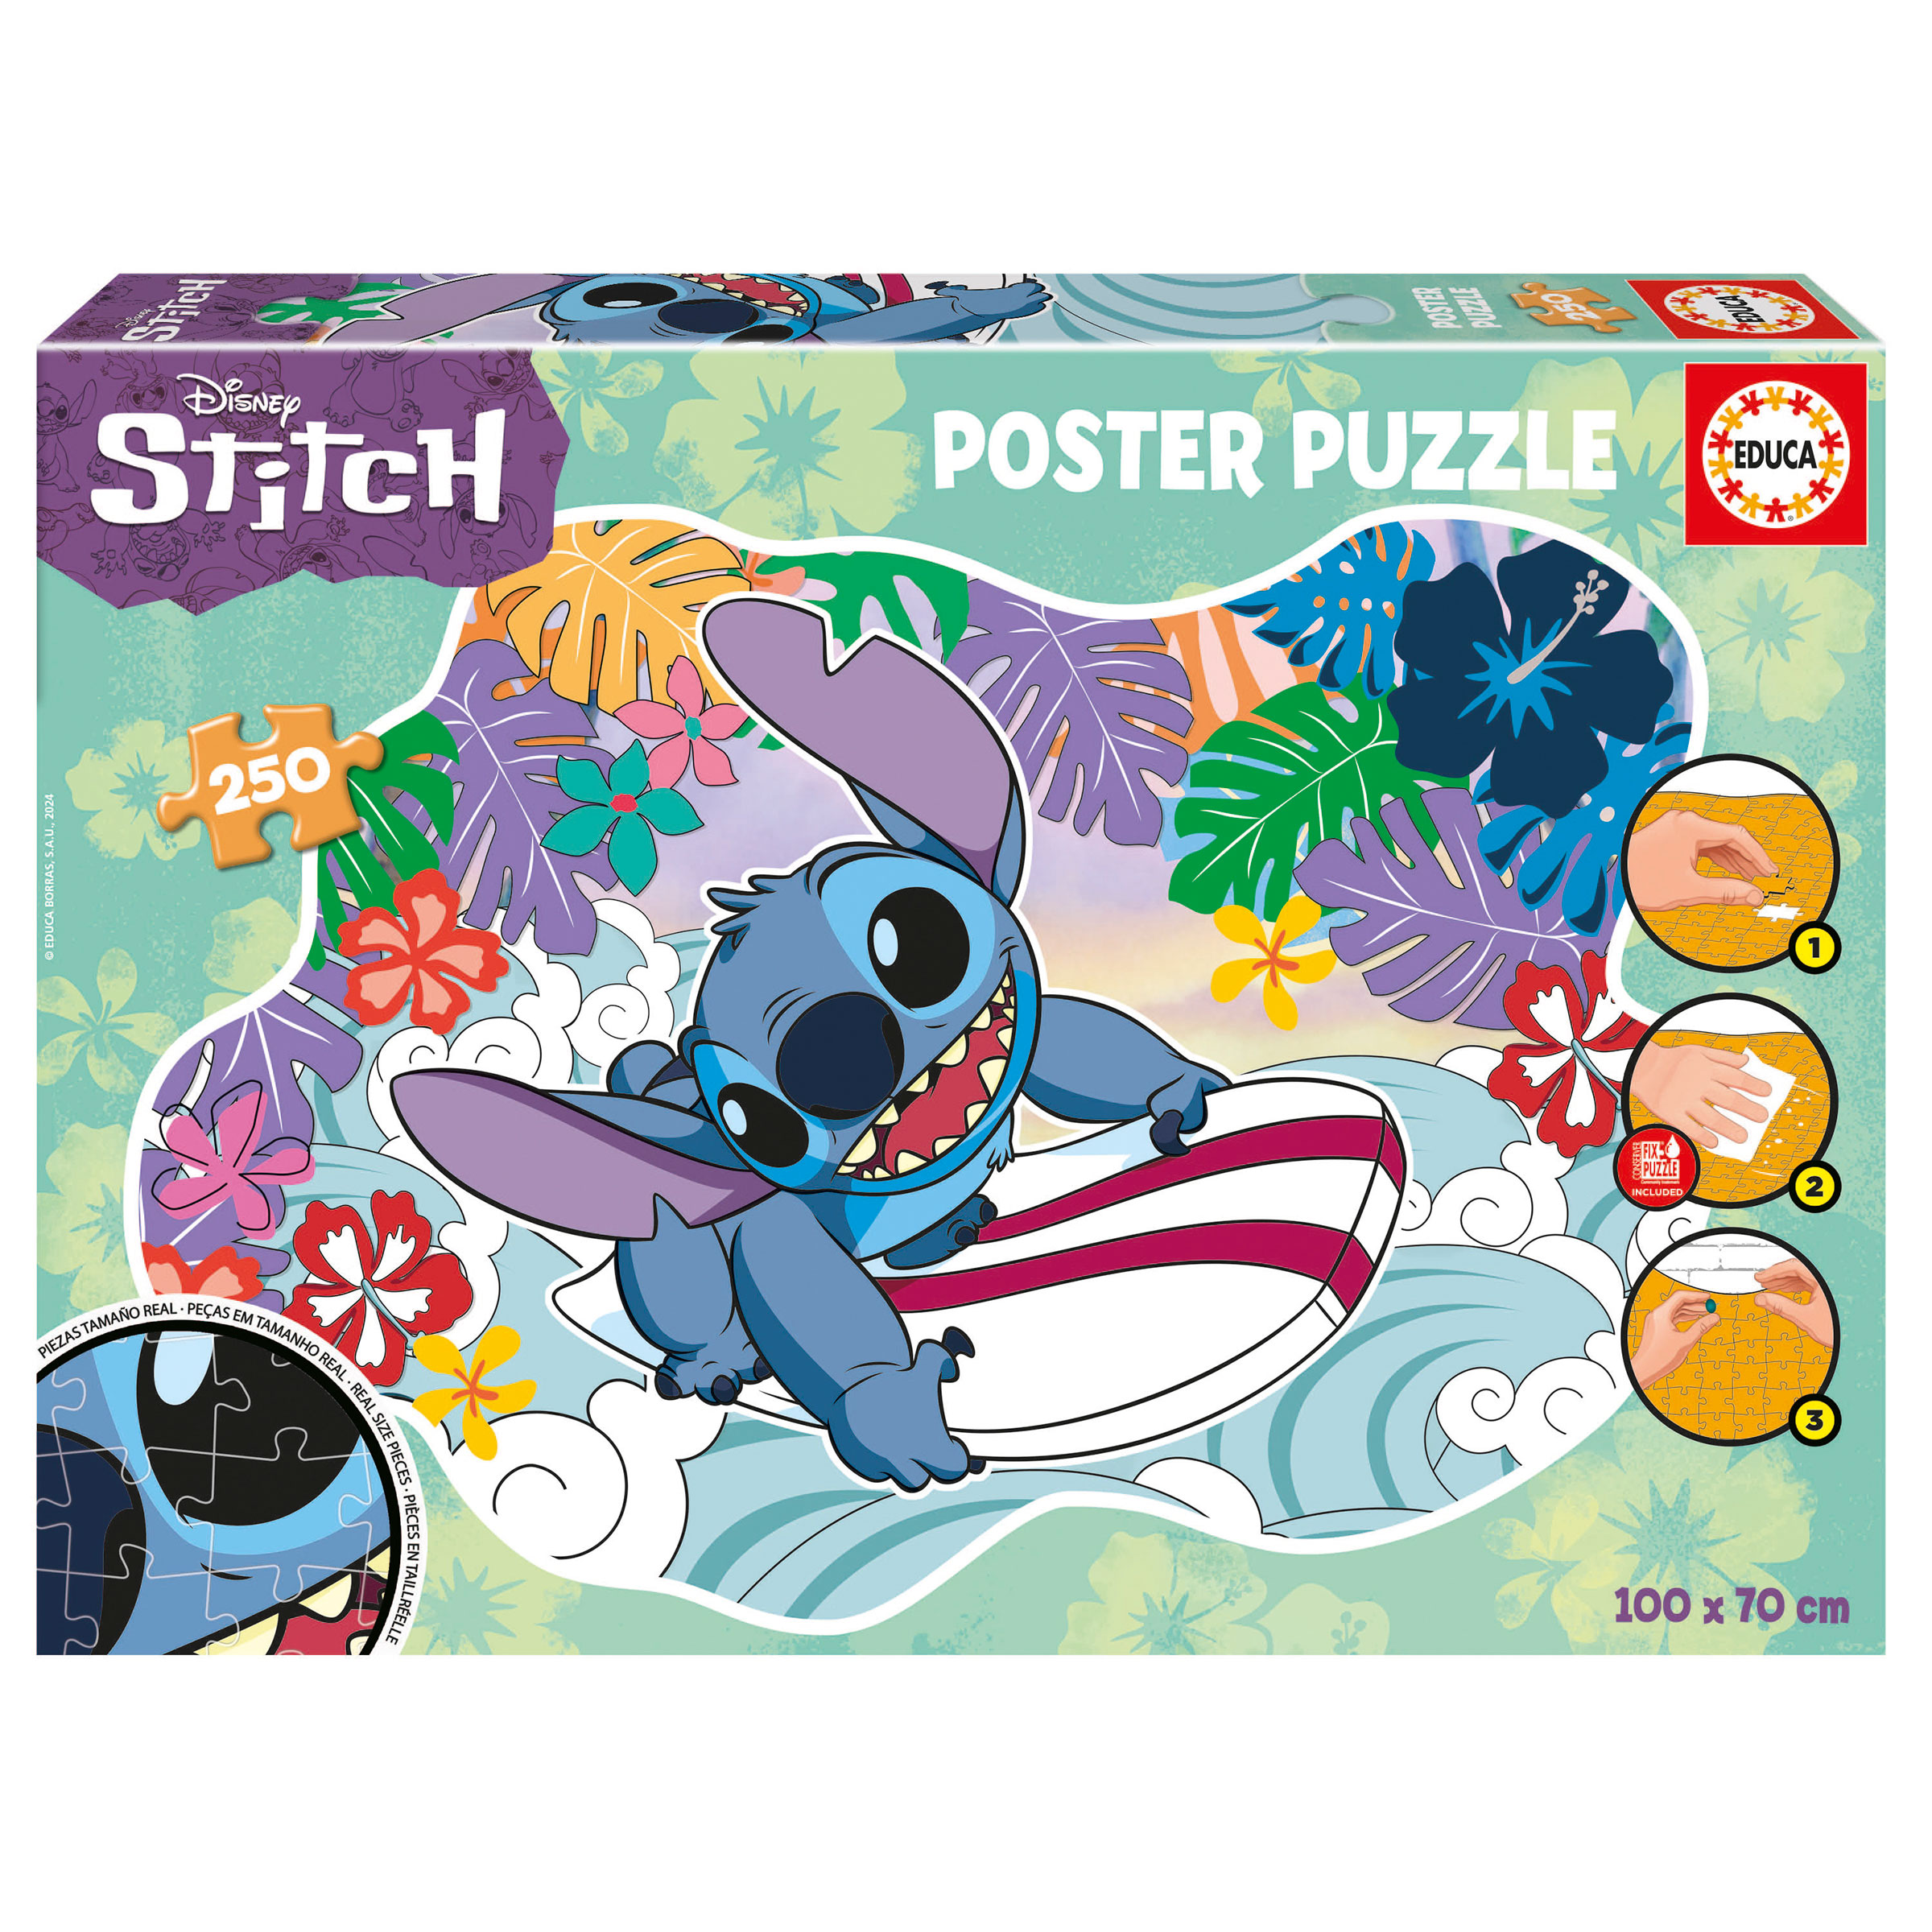 250 Stitch Poster Puzzle